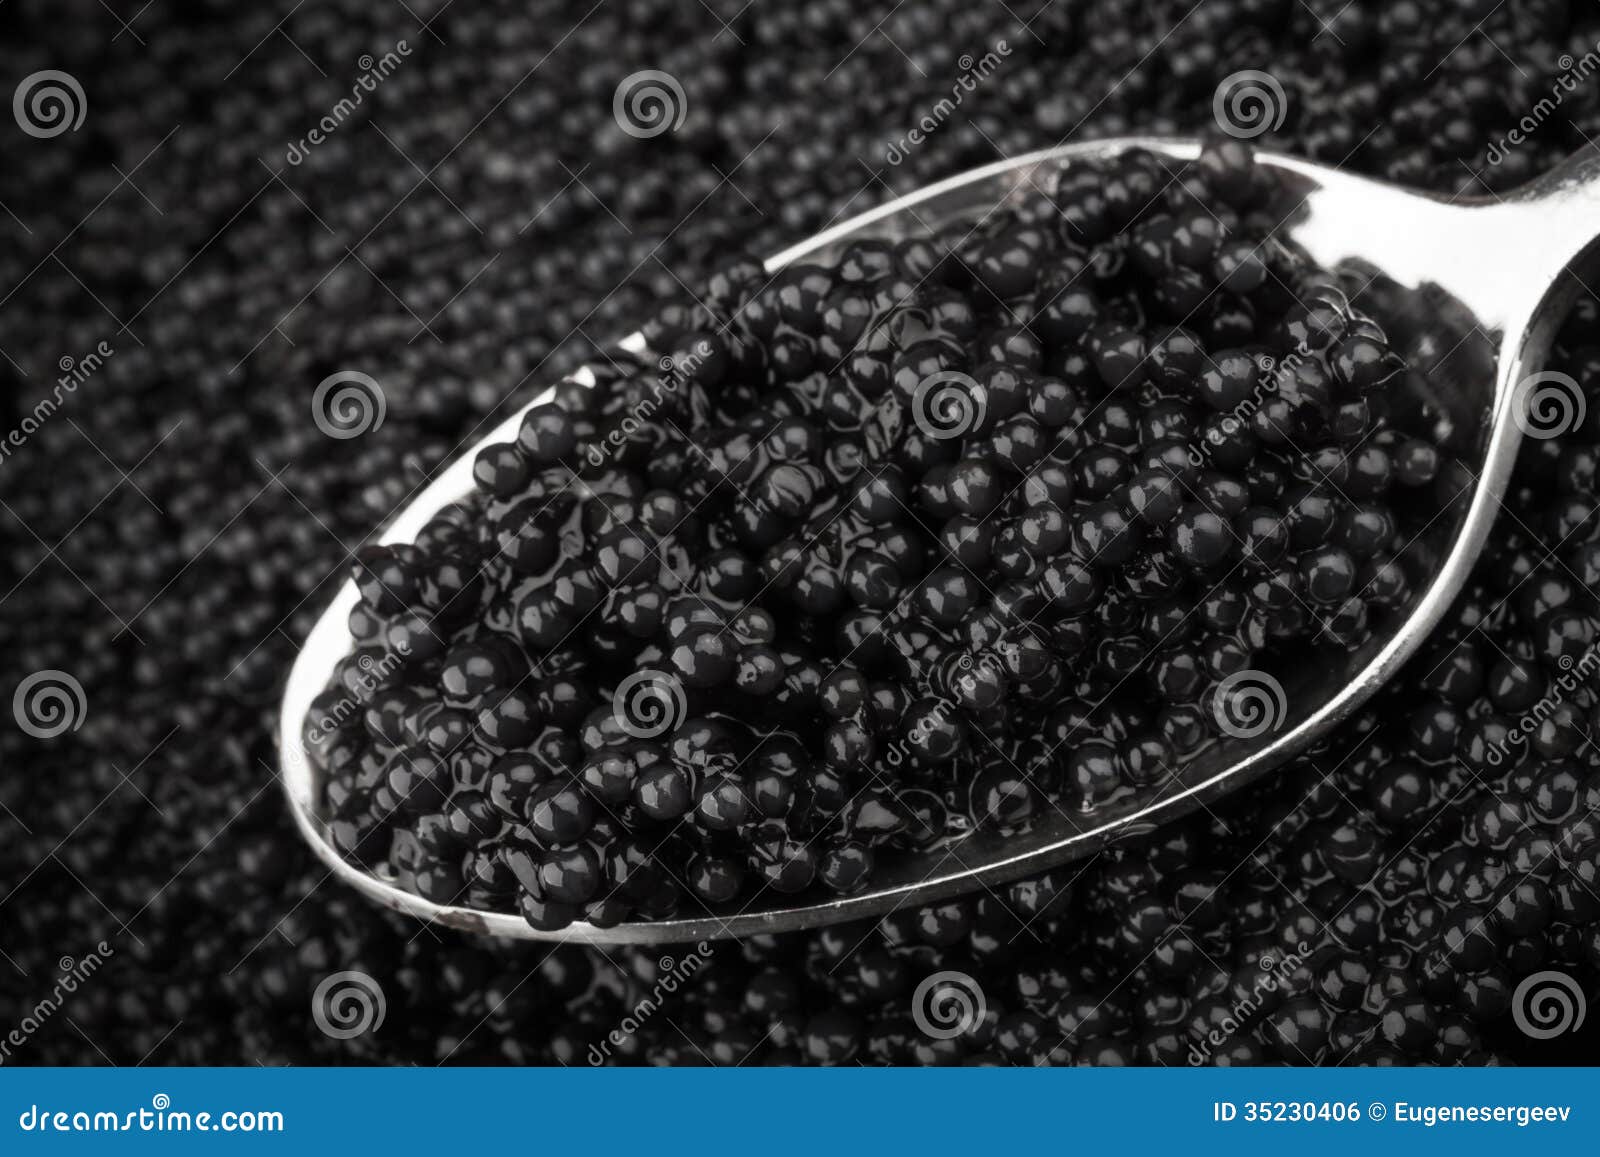 Black Caviar and Metal Spoon, Macro Photo Stock Photo - Image of ...